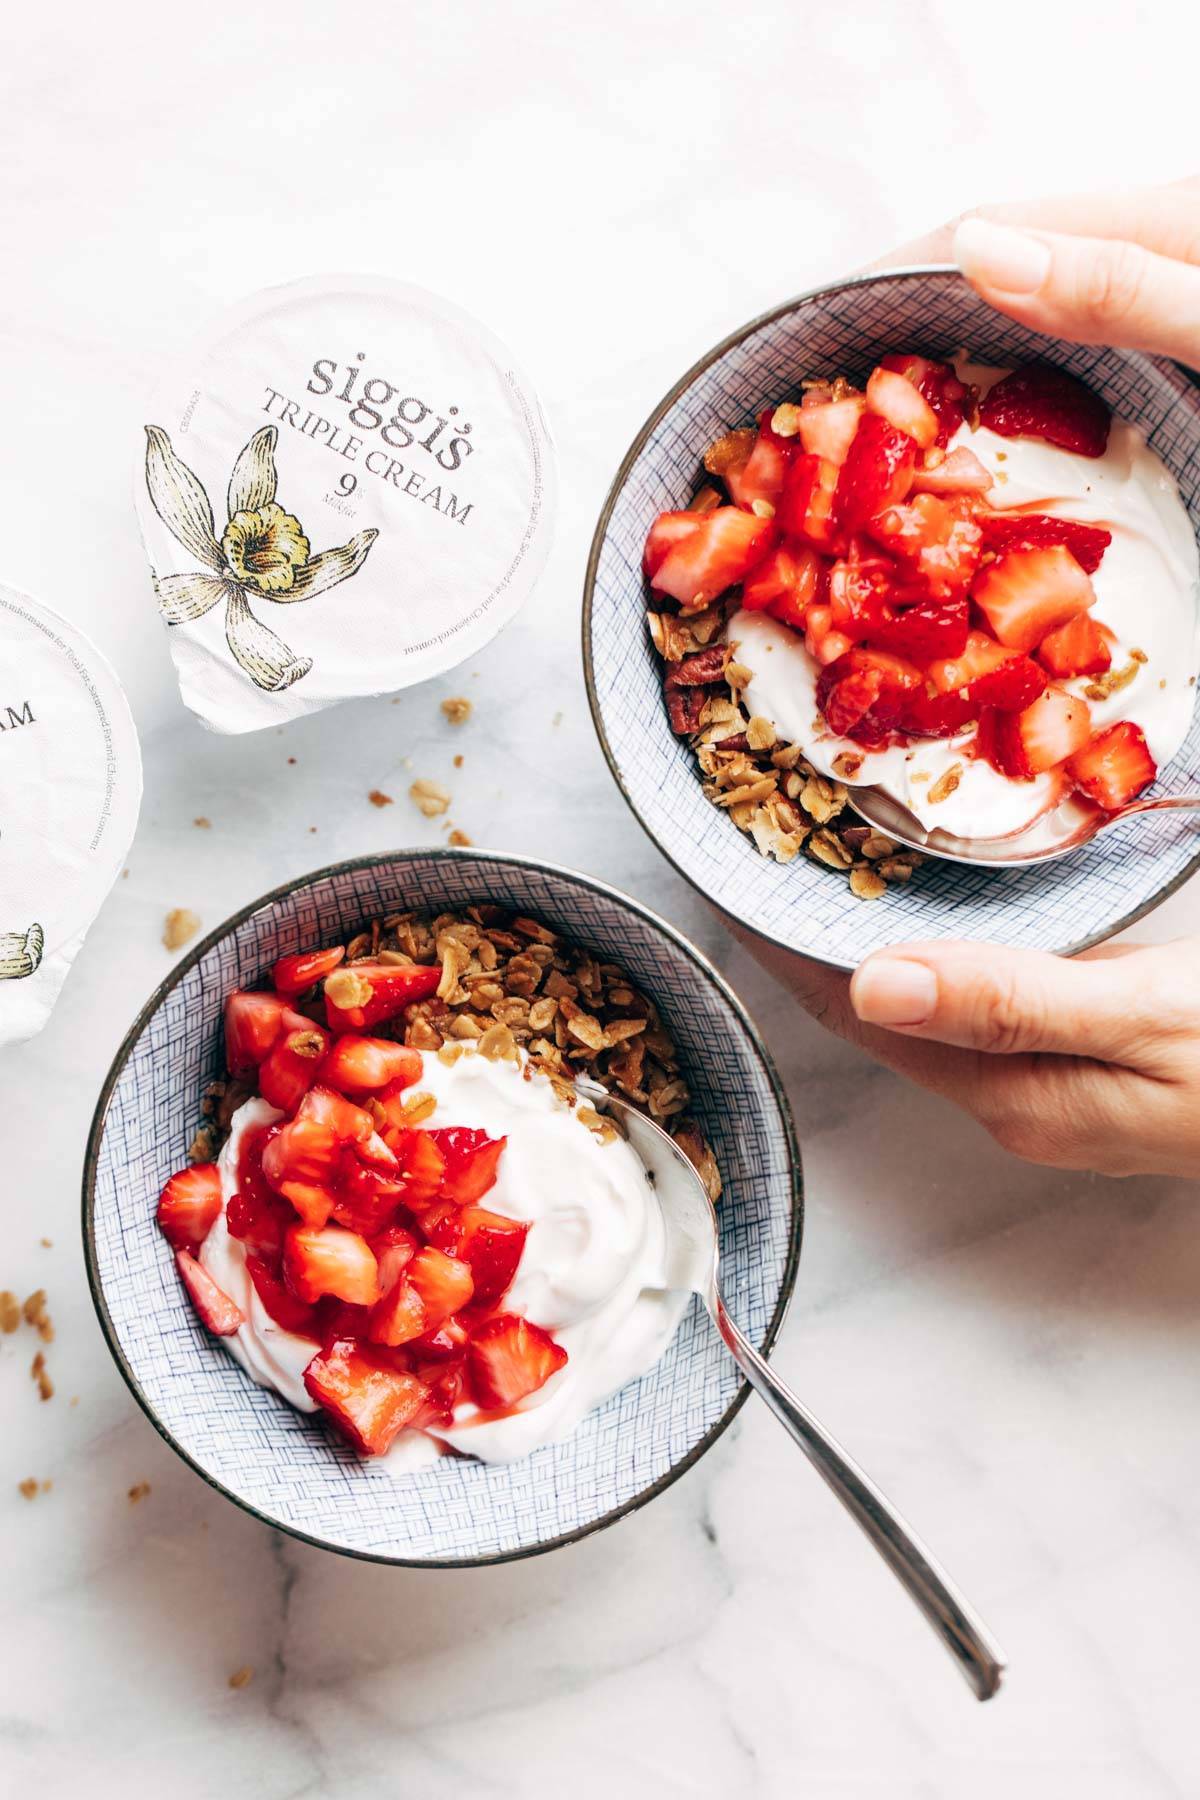 Strawberry Shortcake Yogurt Bowls with siggi's yogurt.